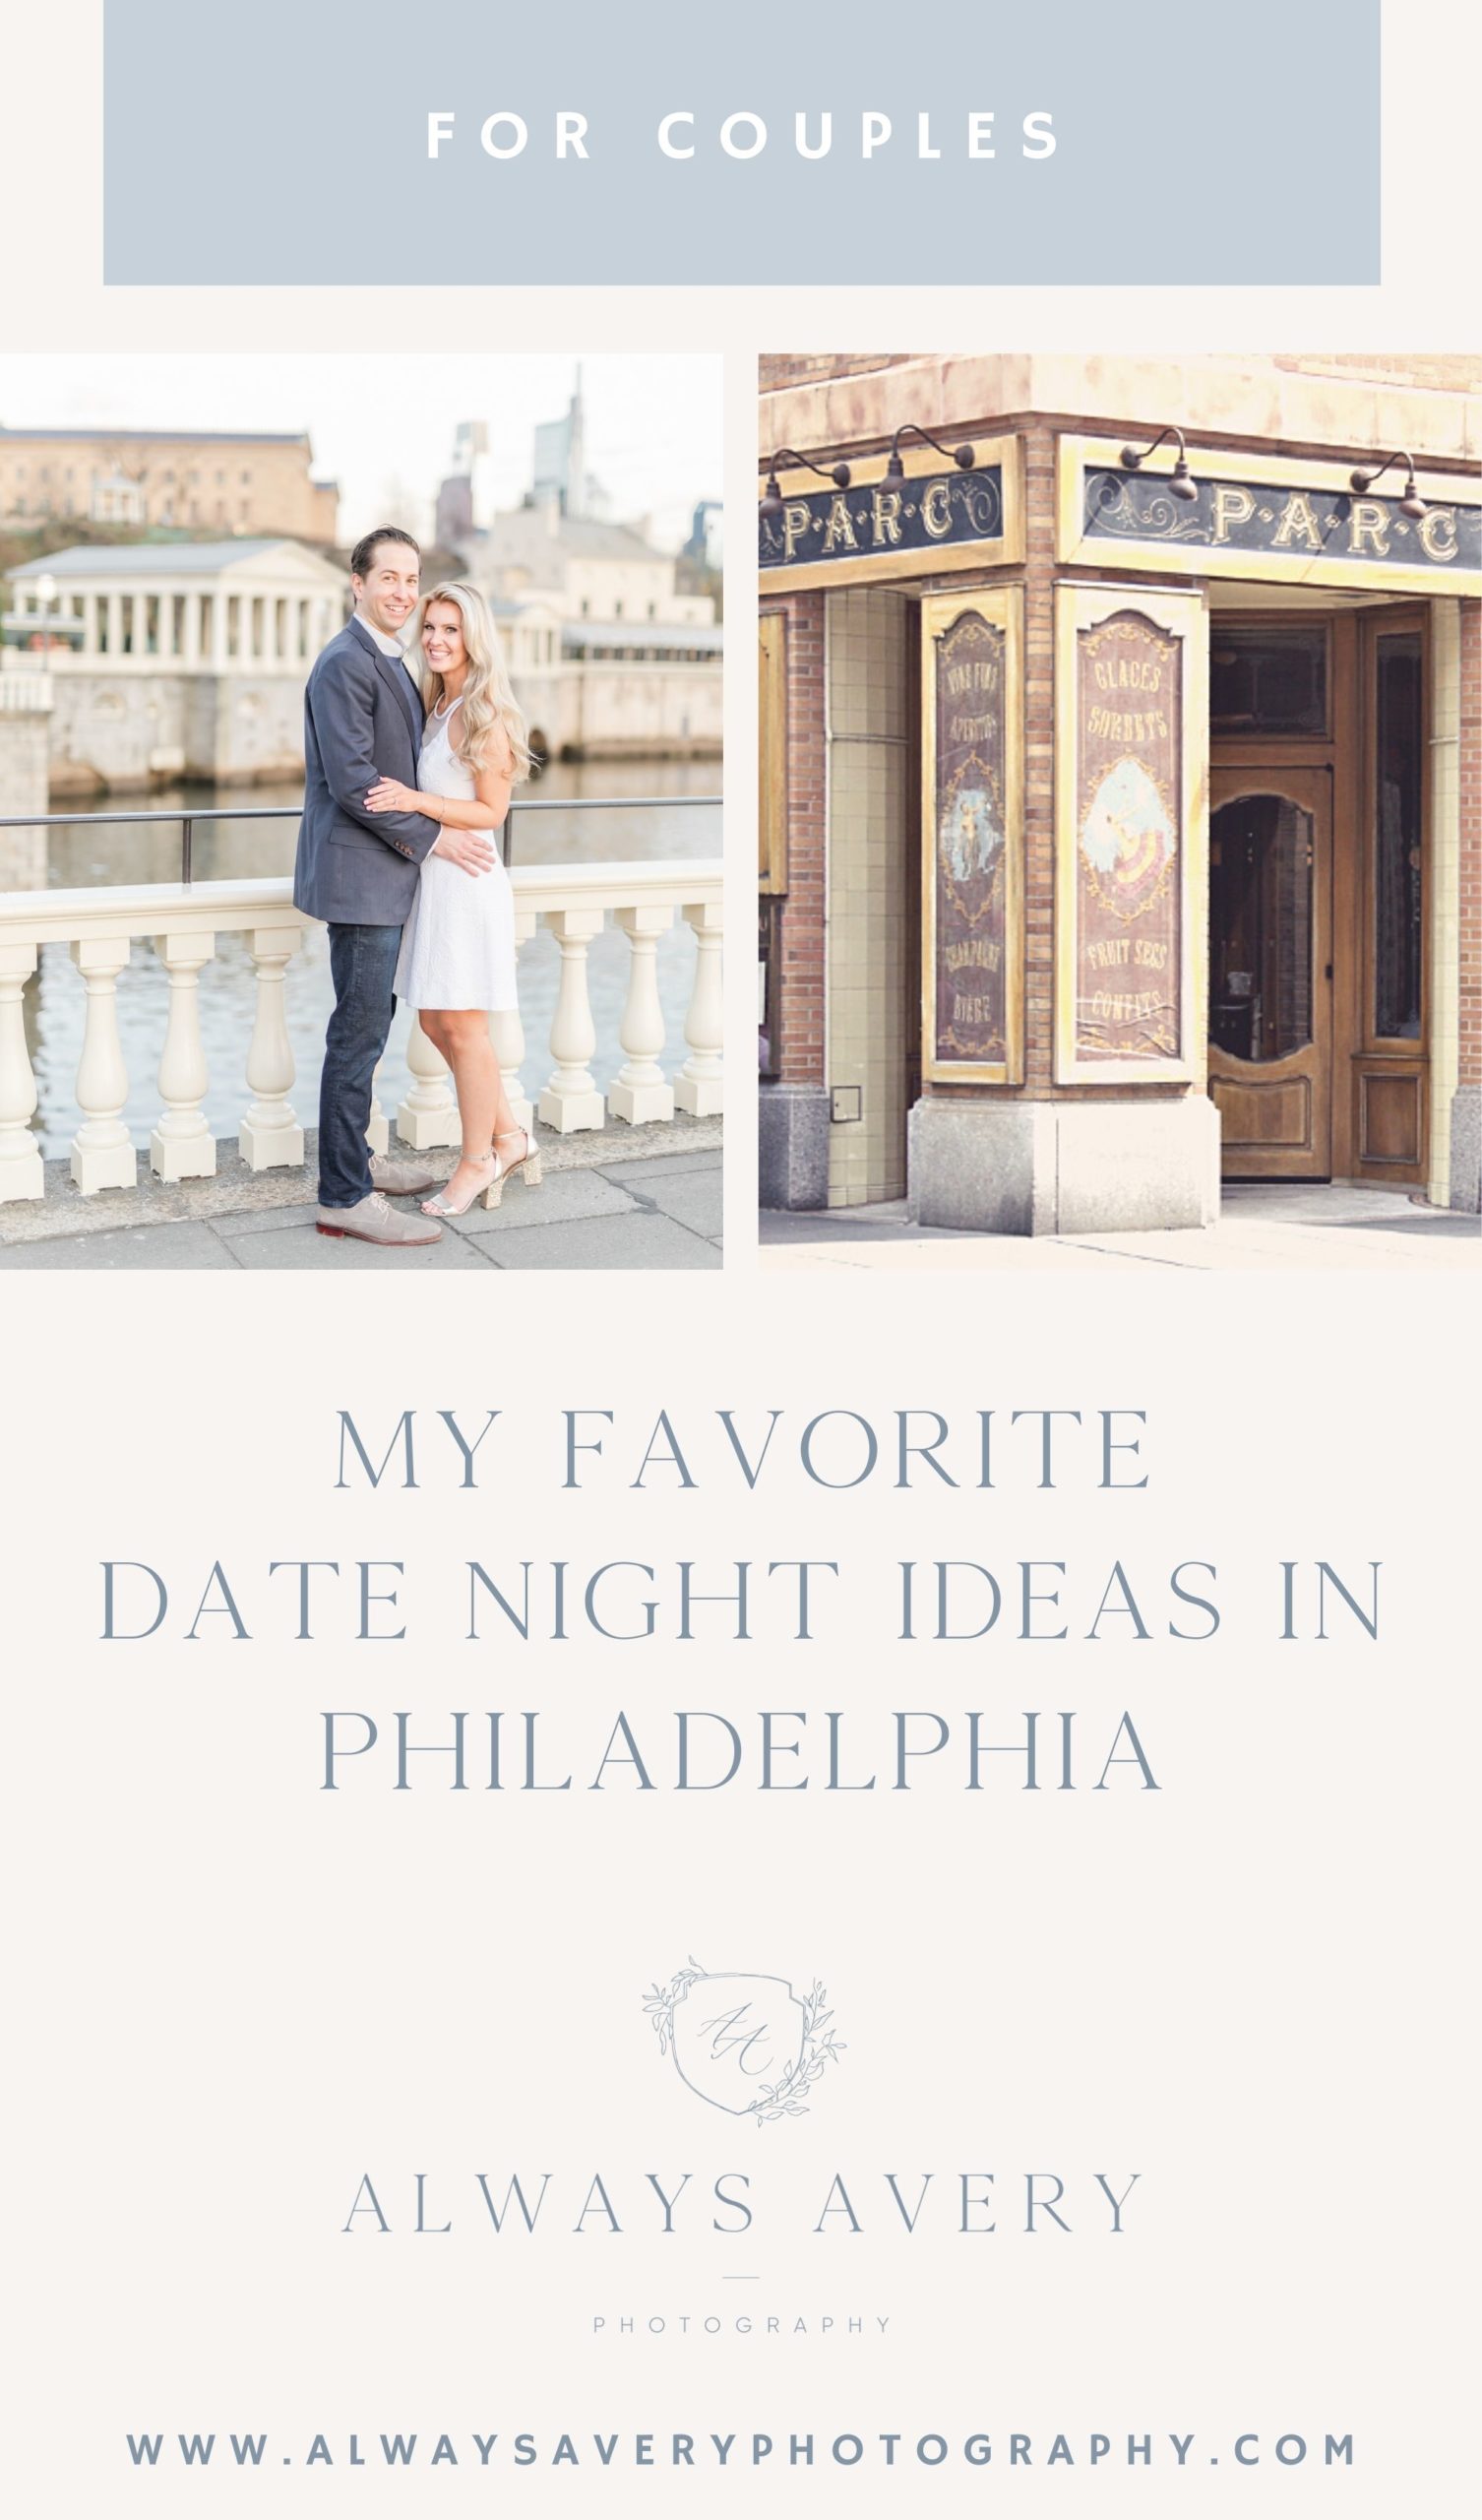 Philadelphia date night ideas for couples